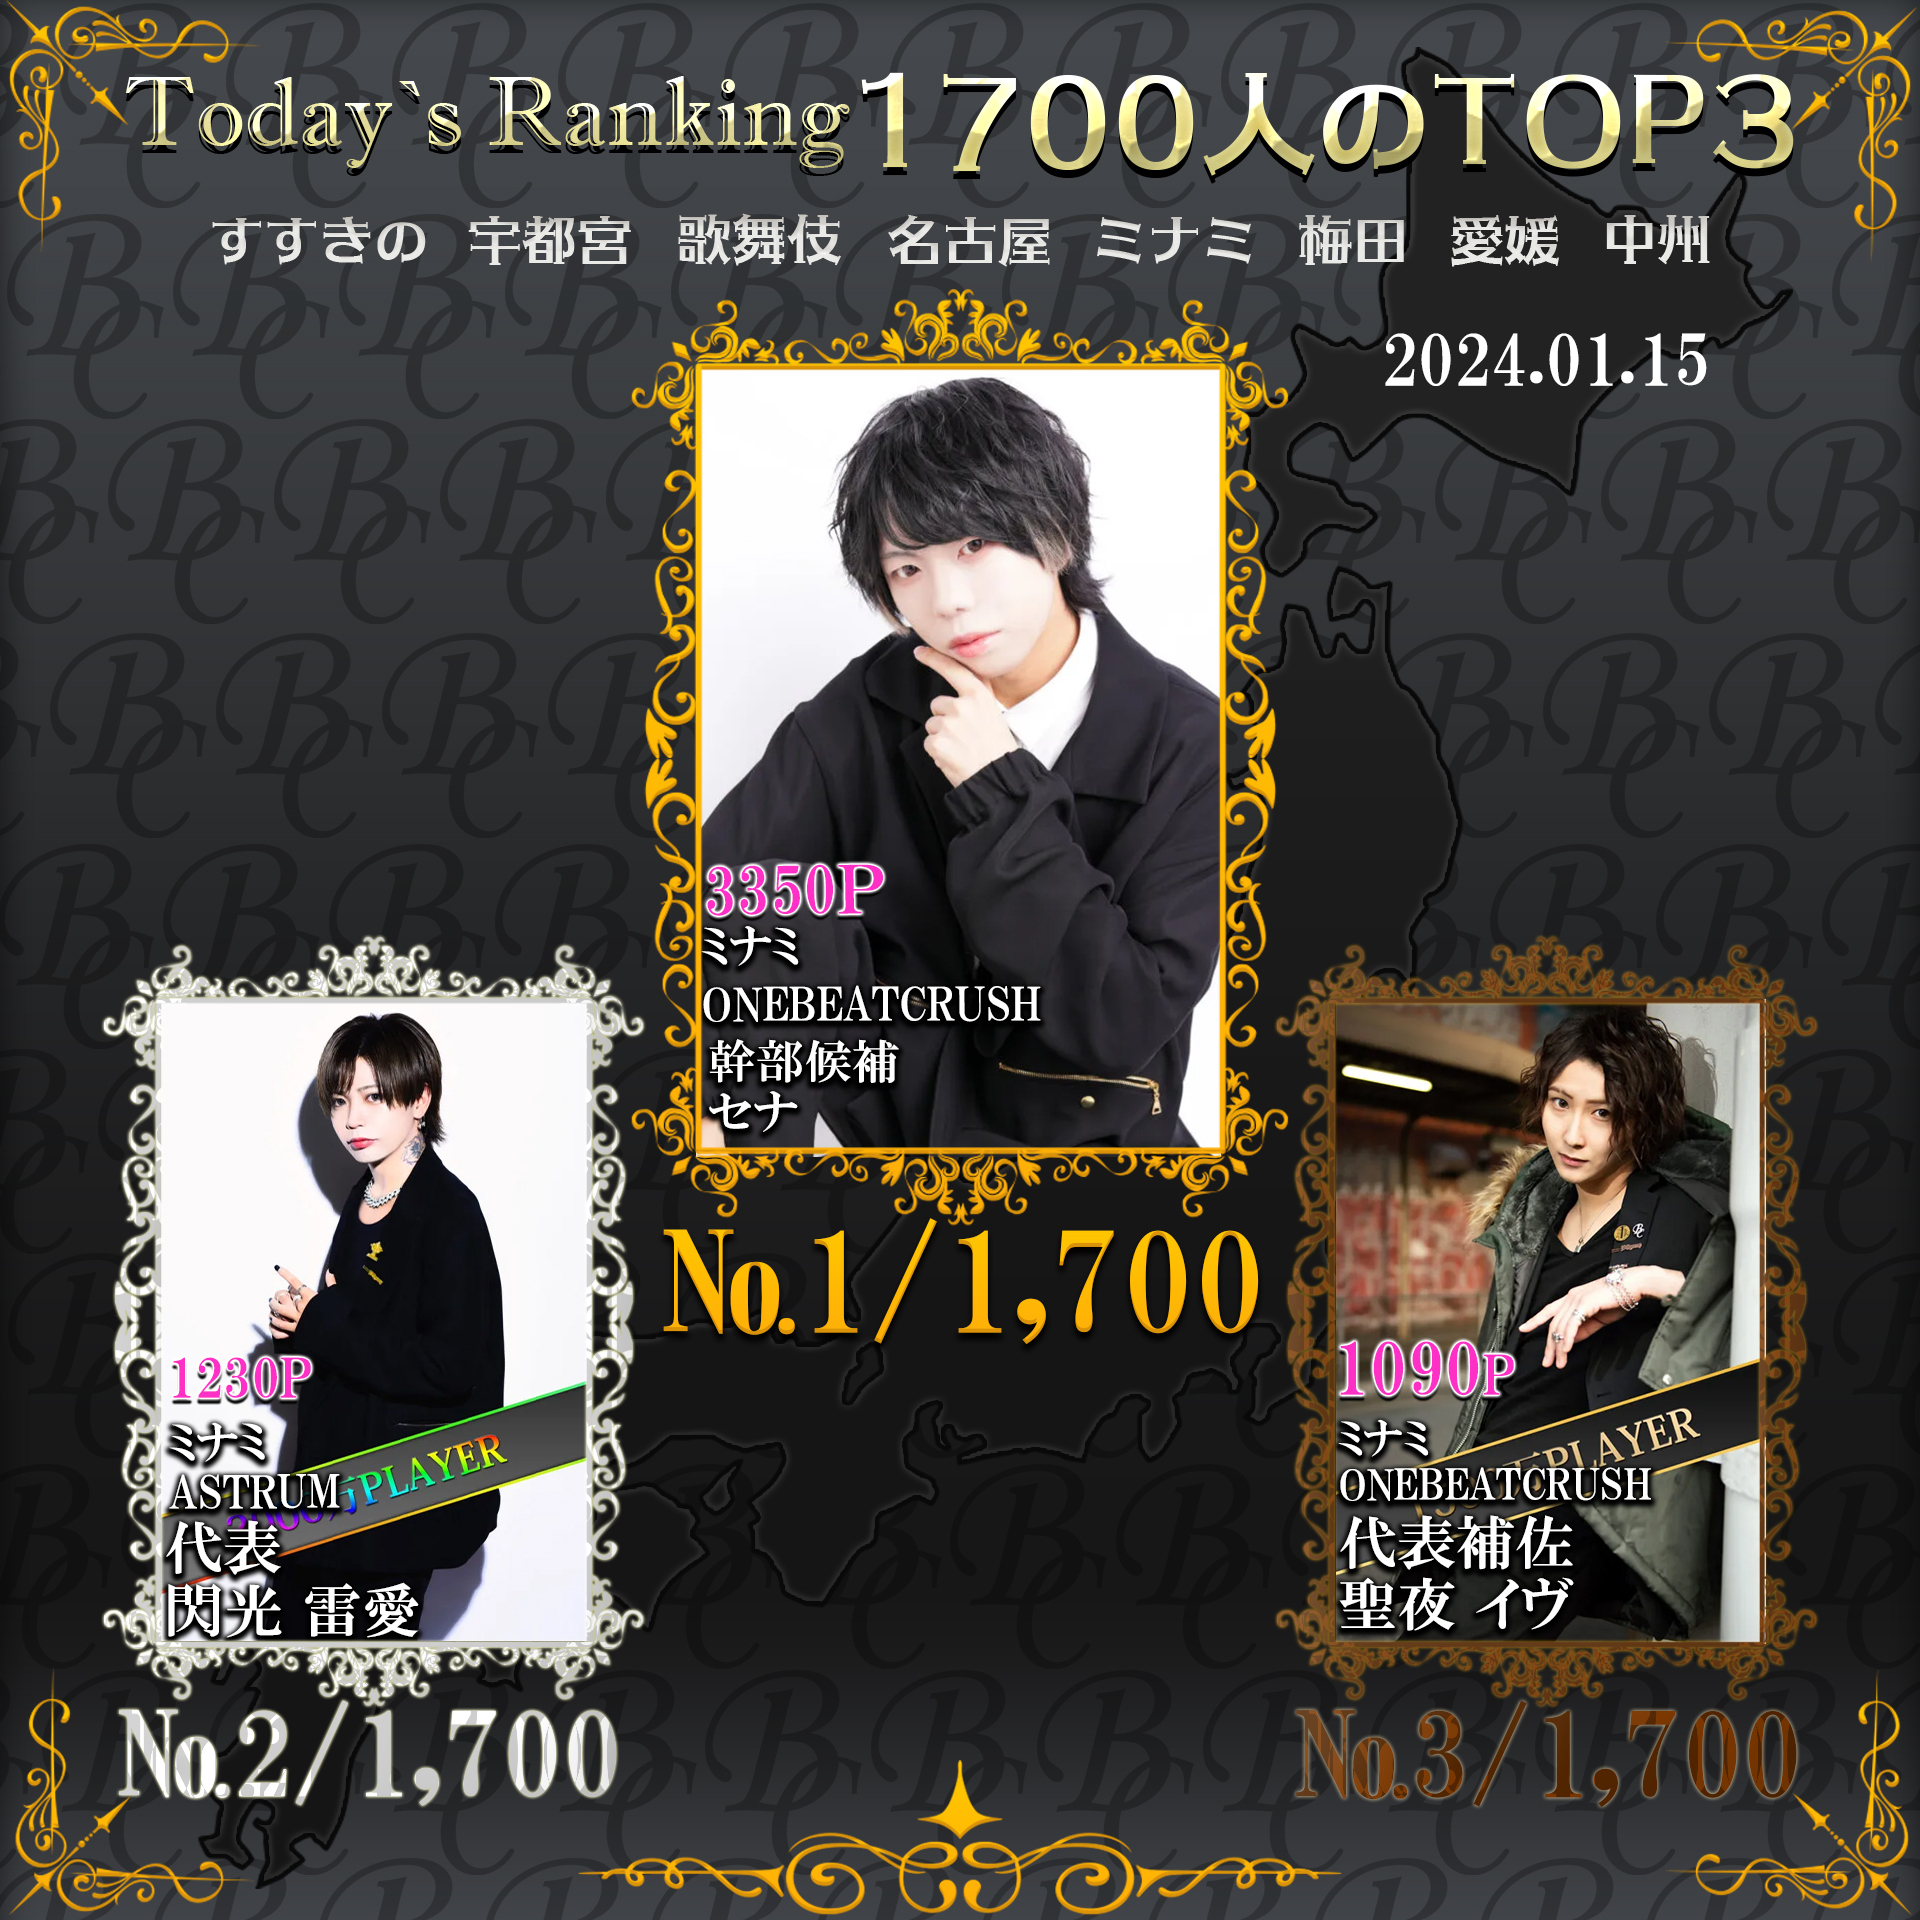 1/15  Today’s Ranking